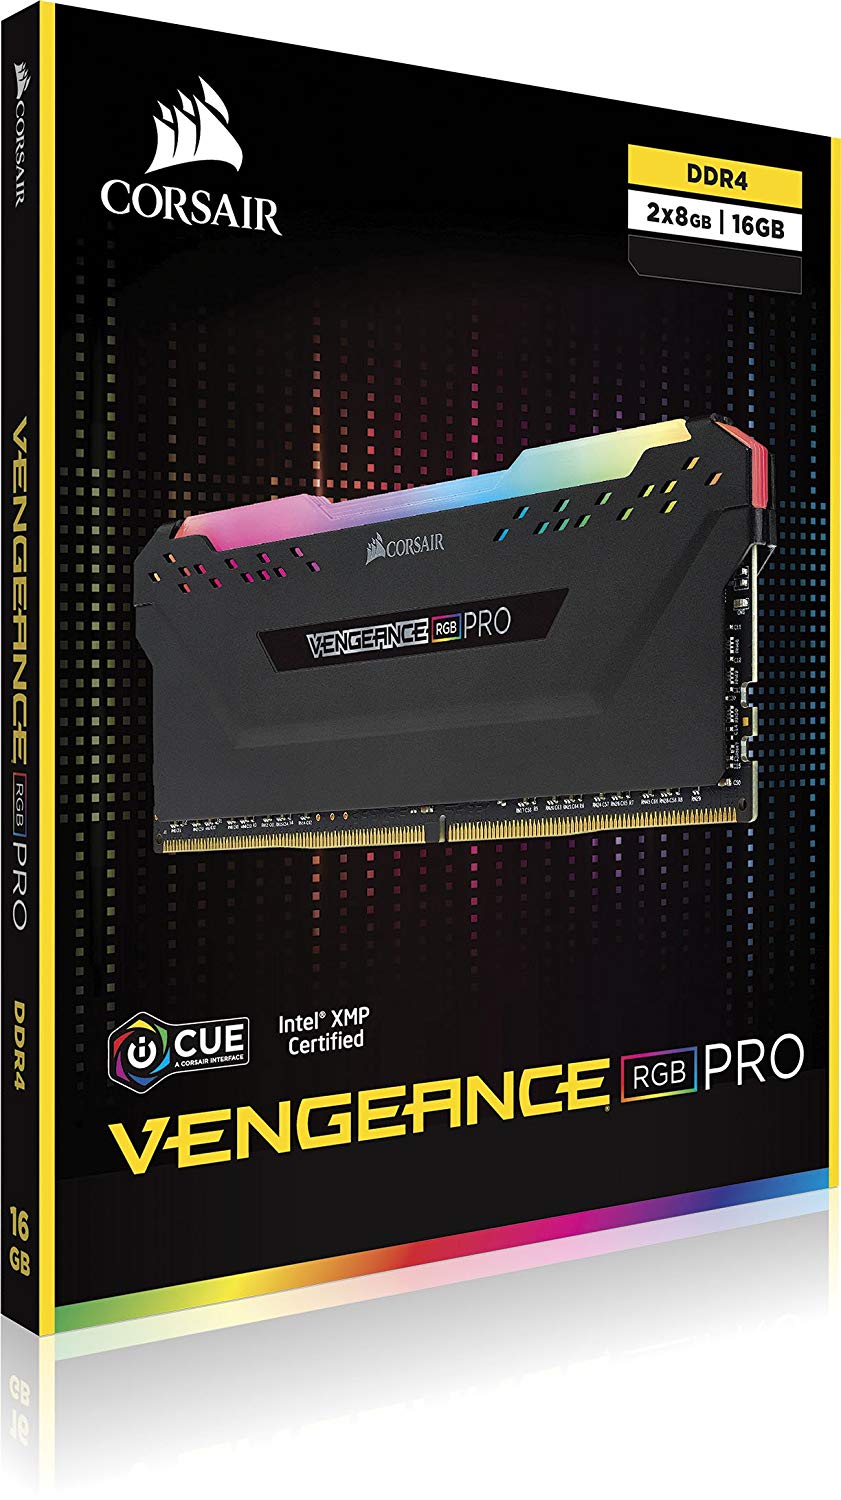 CORSAIR Vengeance RGB PRO 16GB (2x8GB) DDR4 3200MHz C16 LED Desktop Memory - Black